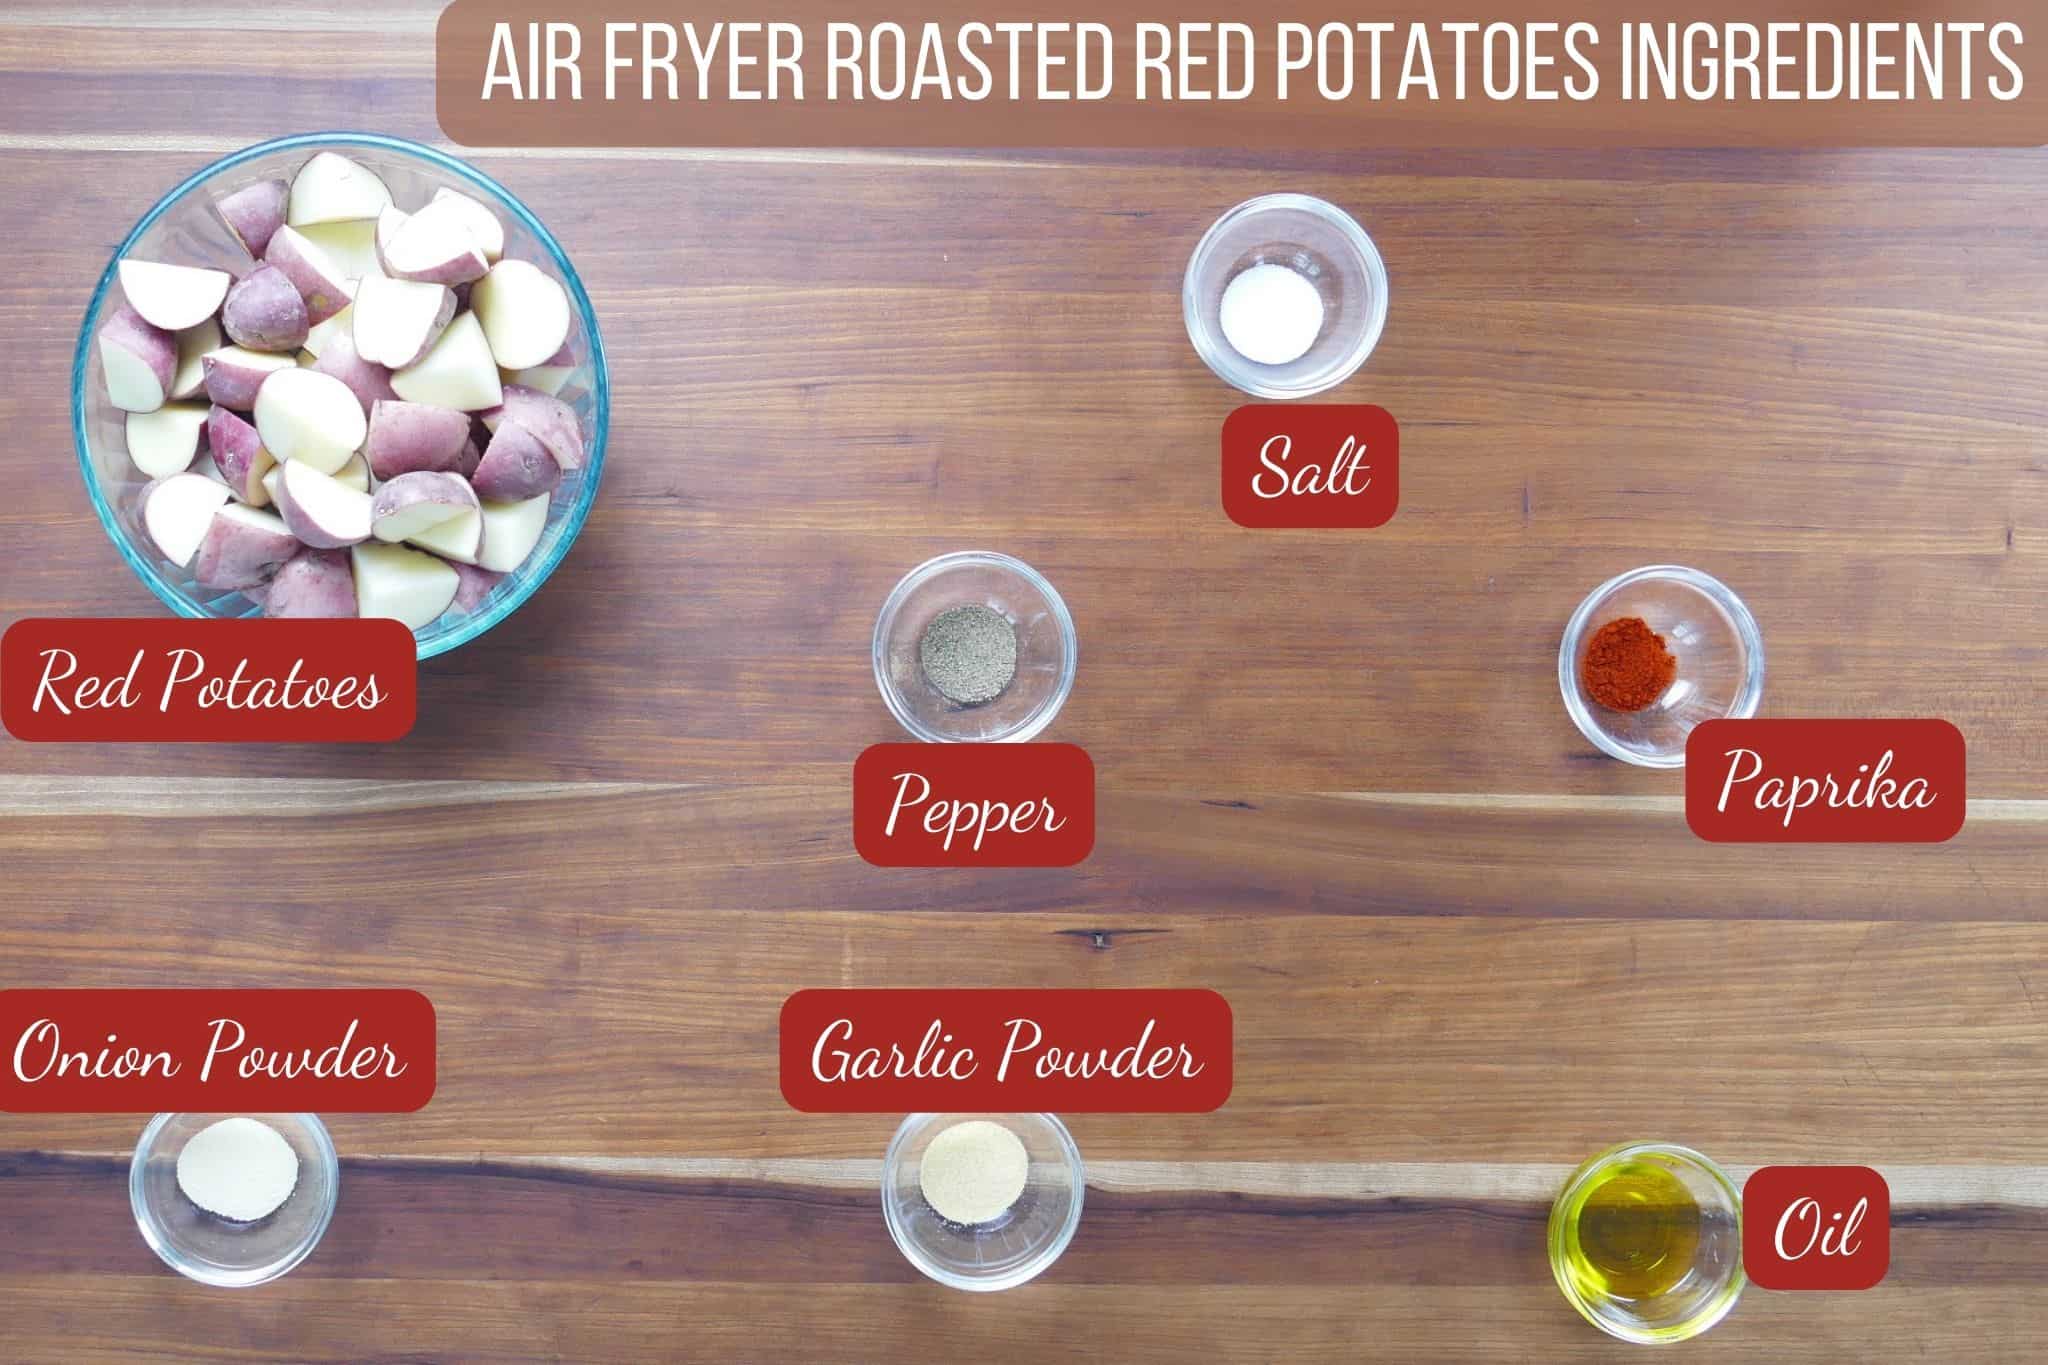 Air fryer roasted red potatoes ingredients in individual bowls